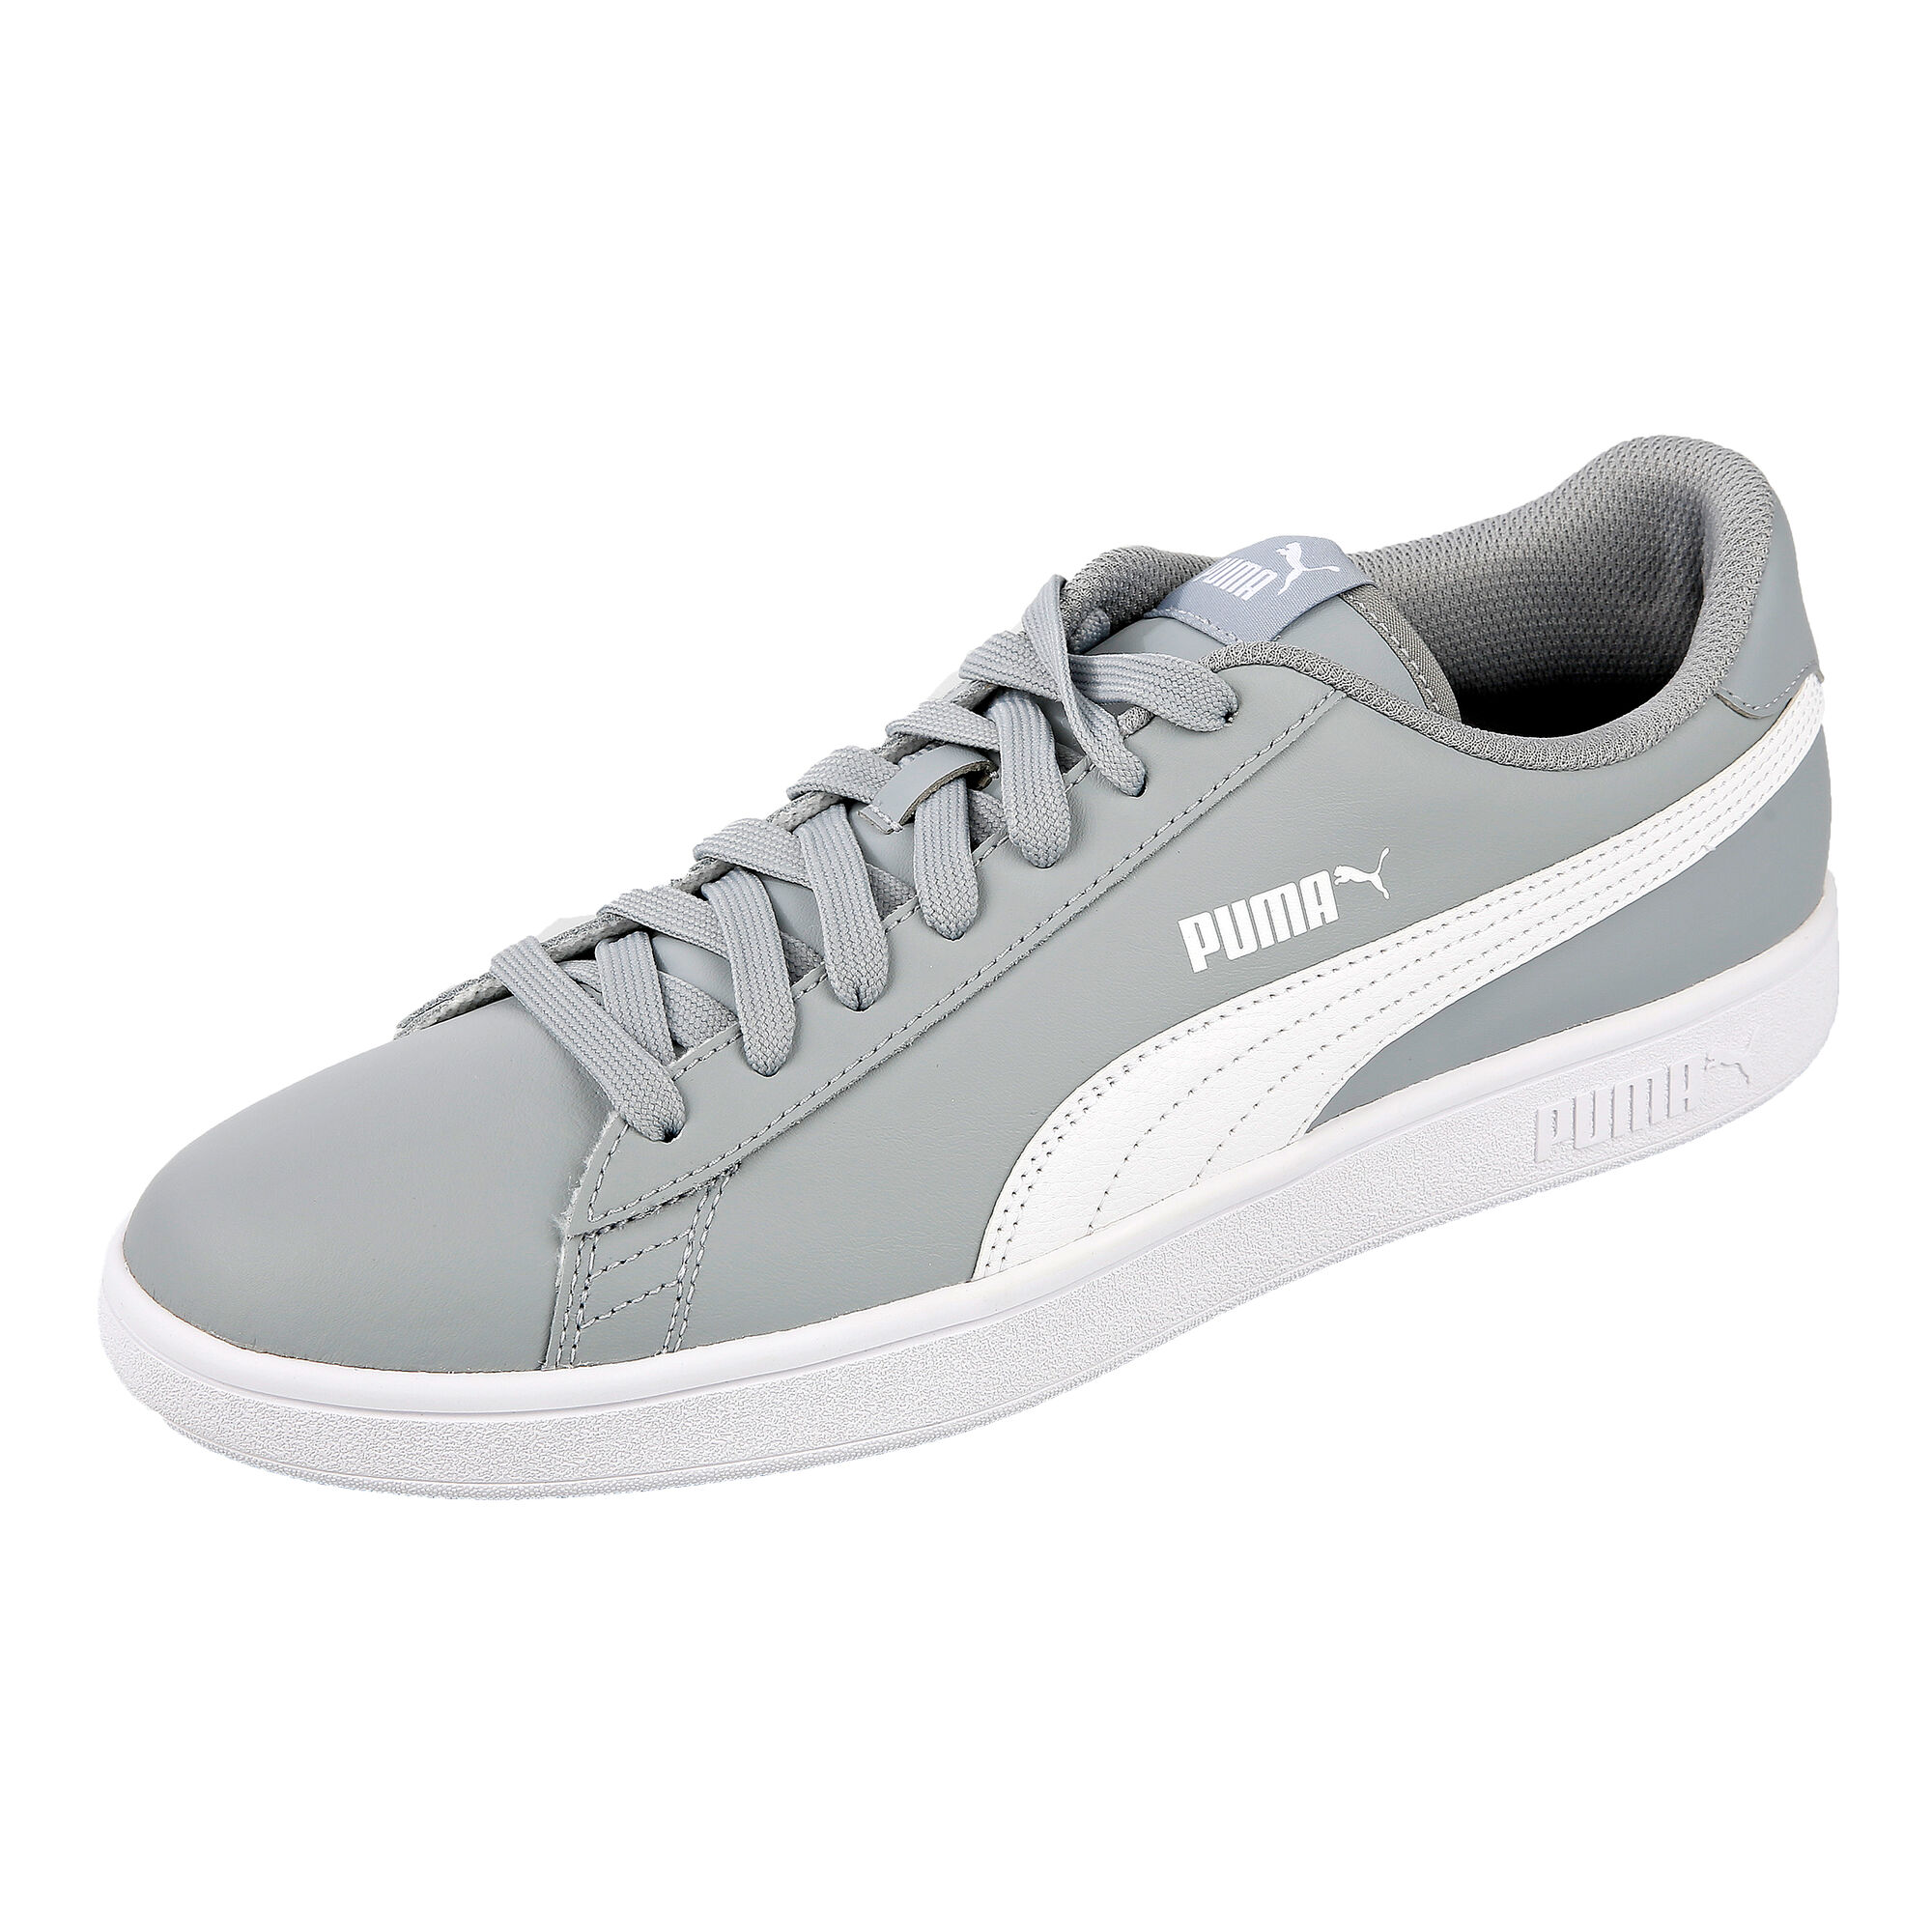 Buy Puma Smash V2 L Sneakers Men Grey, White online